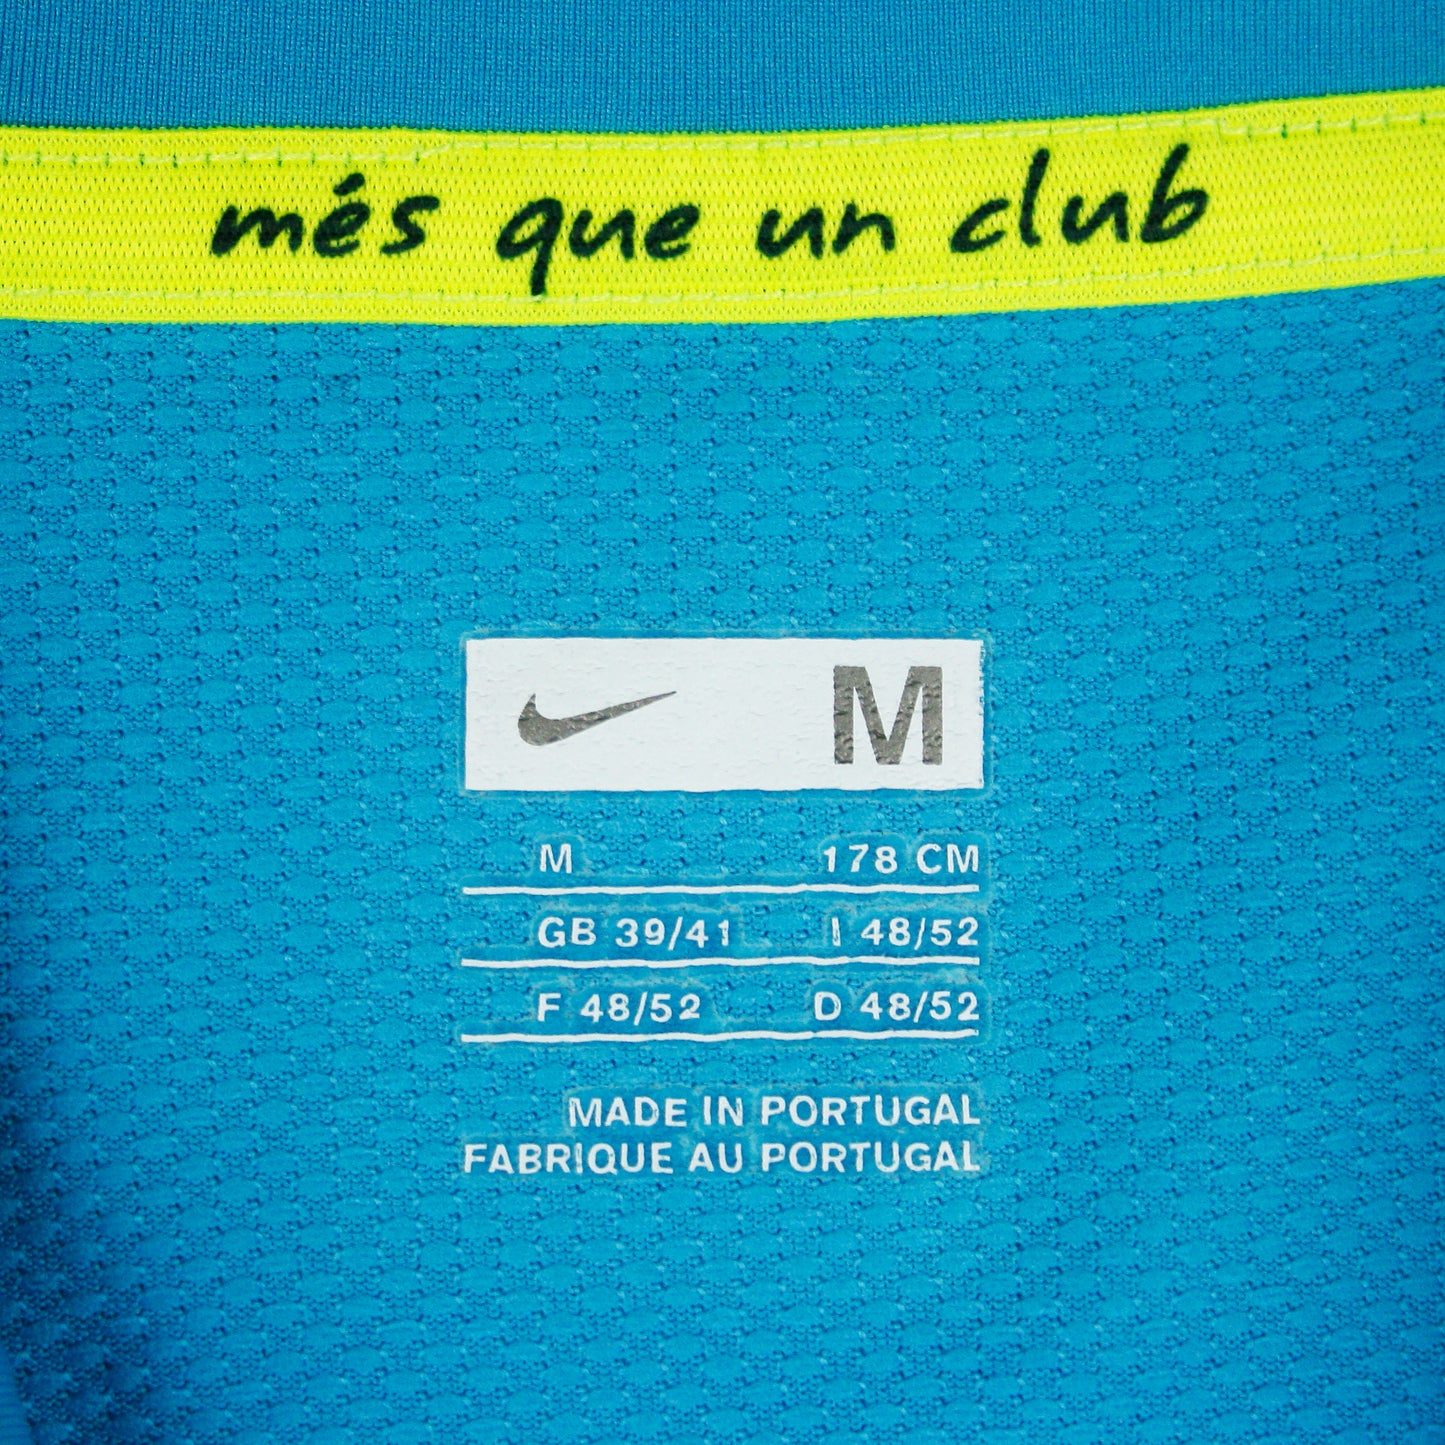 Barcelona 07/08 • *Player Issue* Away Shirt • M